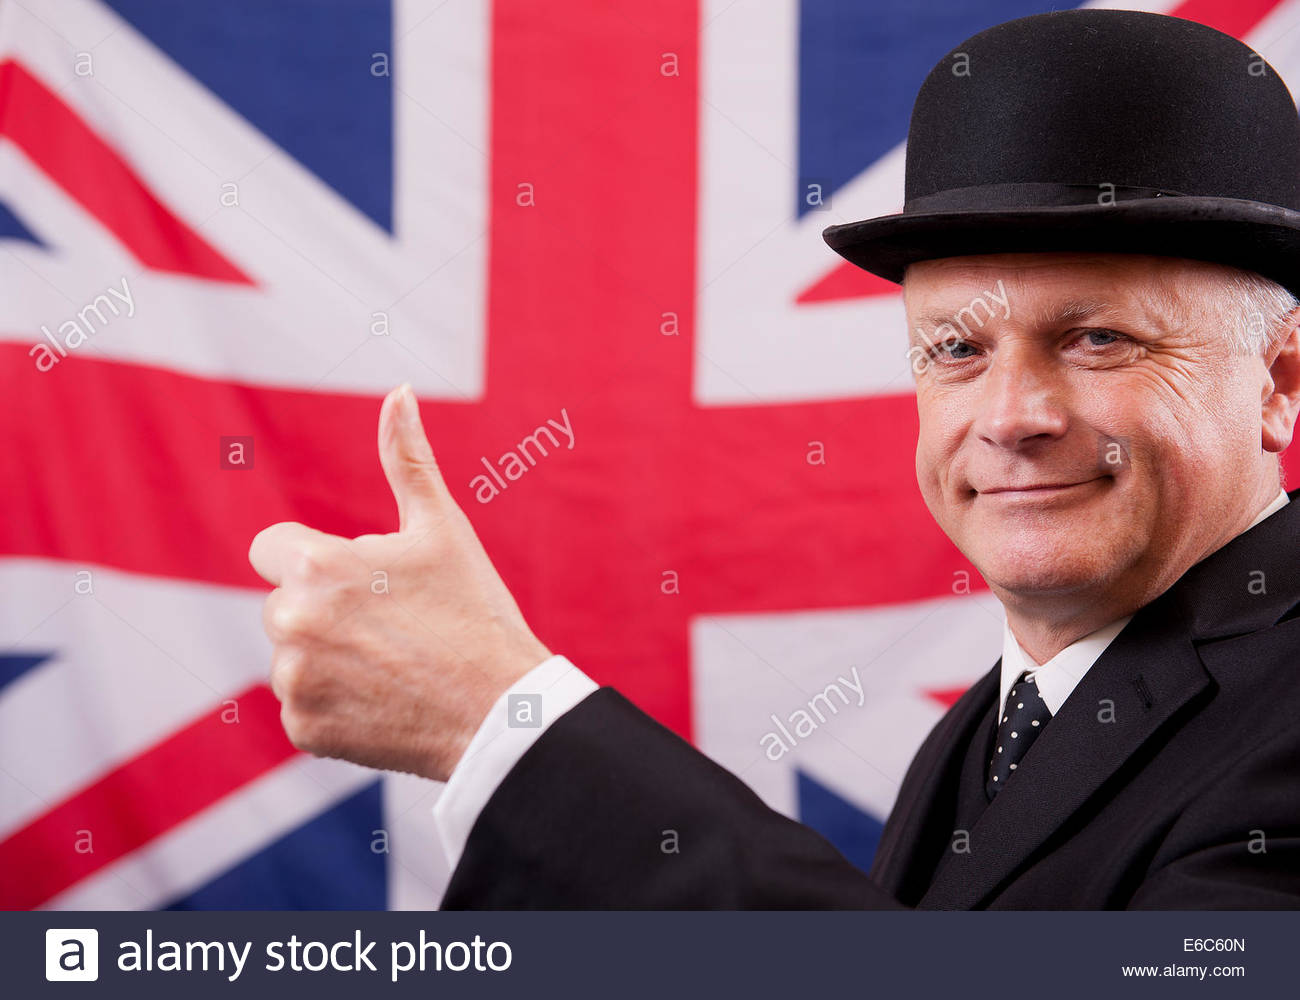 british-businessman-wearing-a-bowler-hat